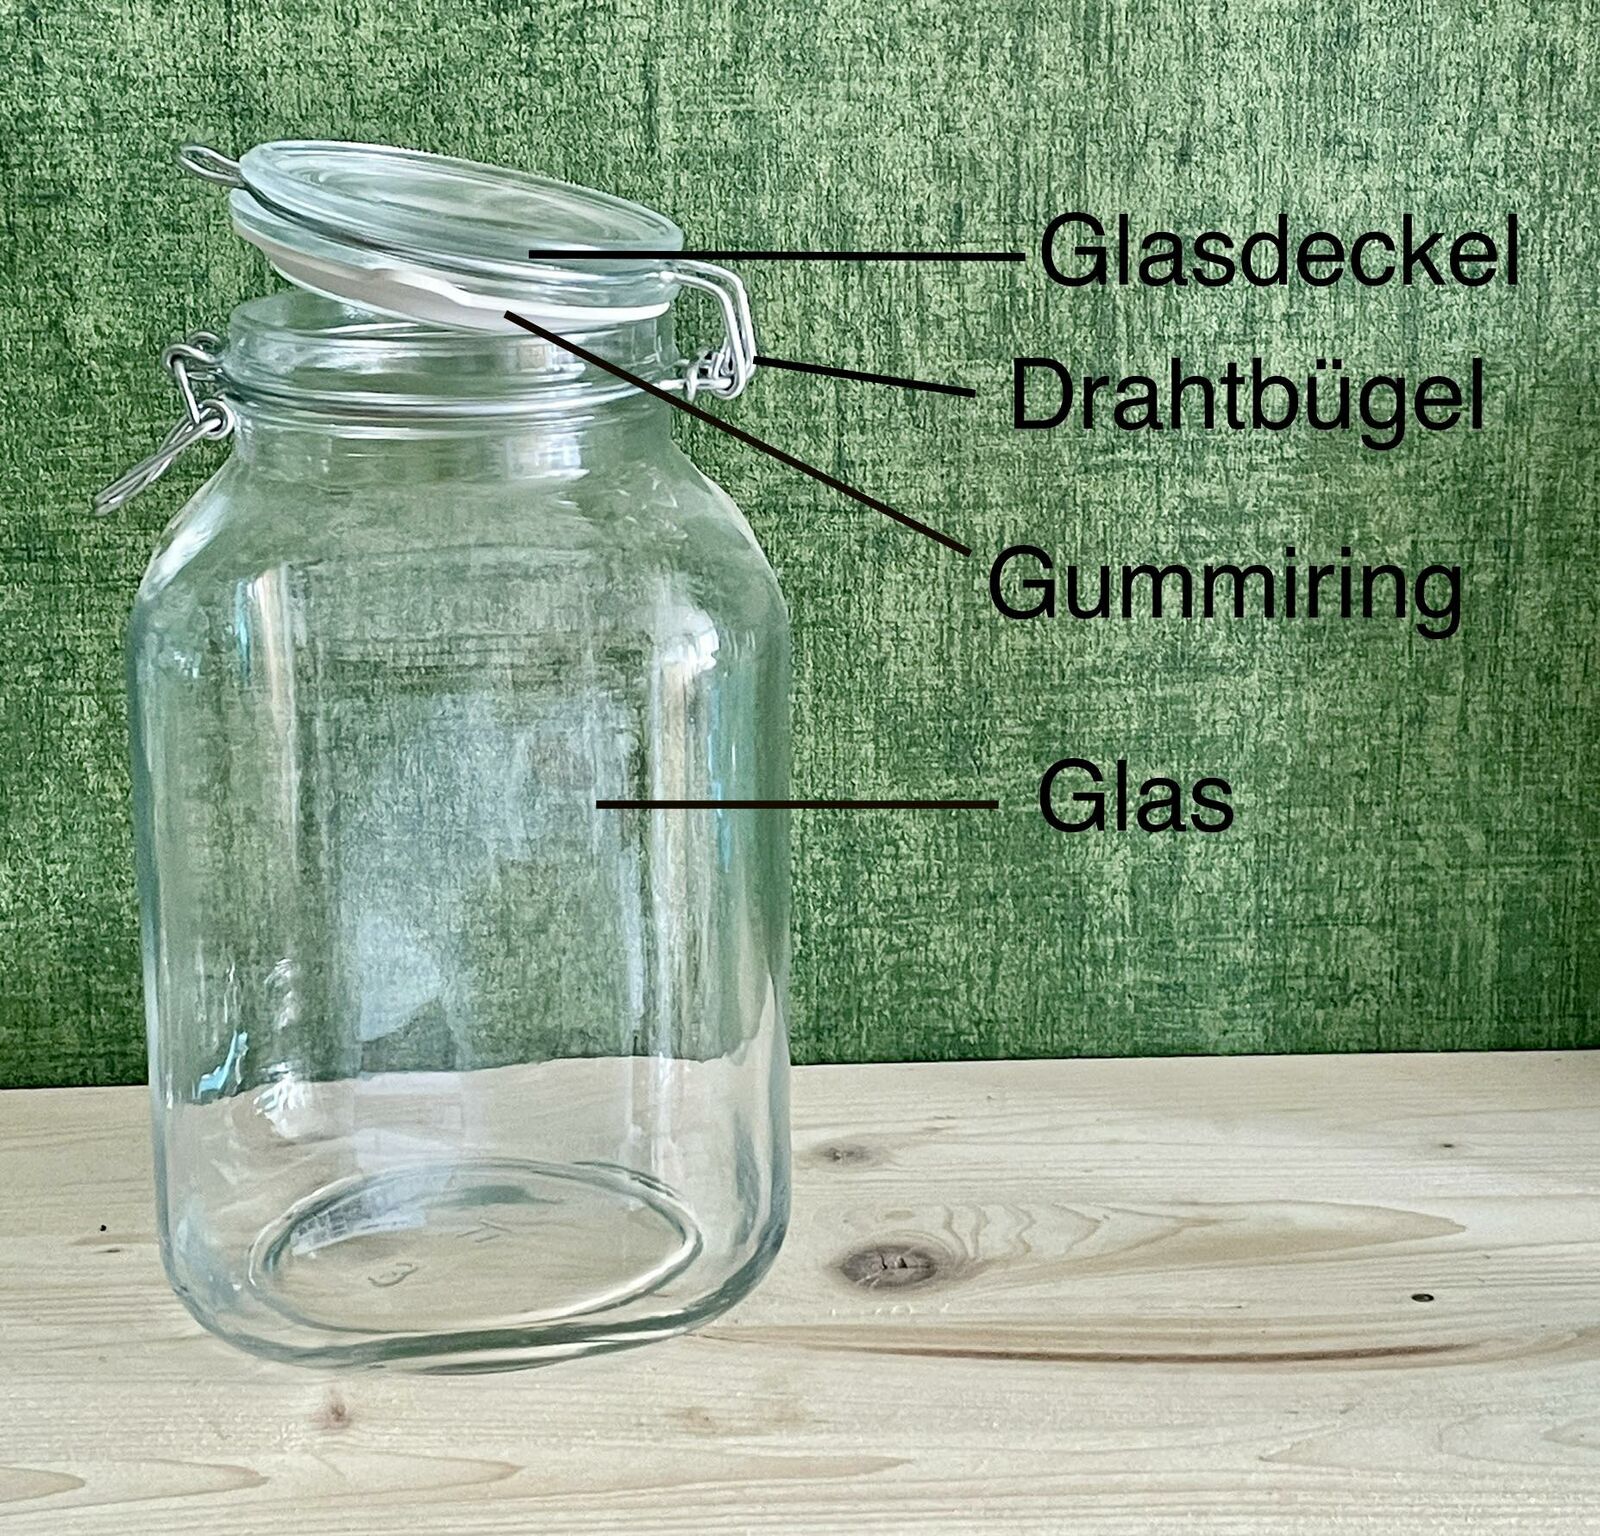 Canning jars for preserving